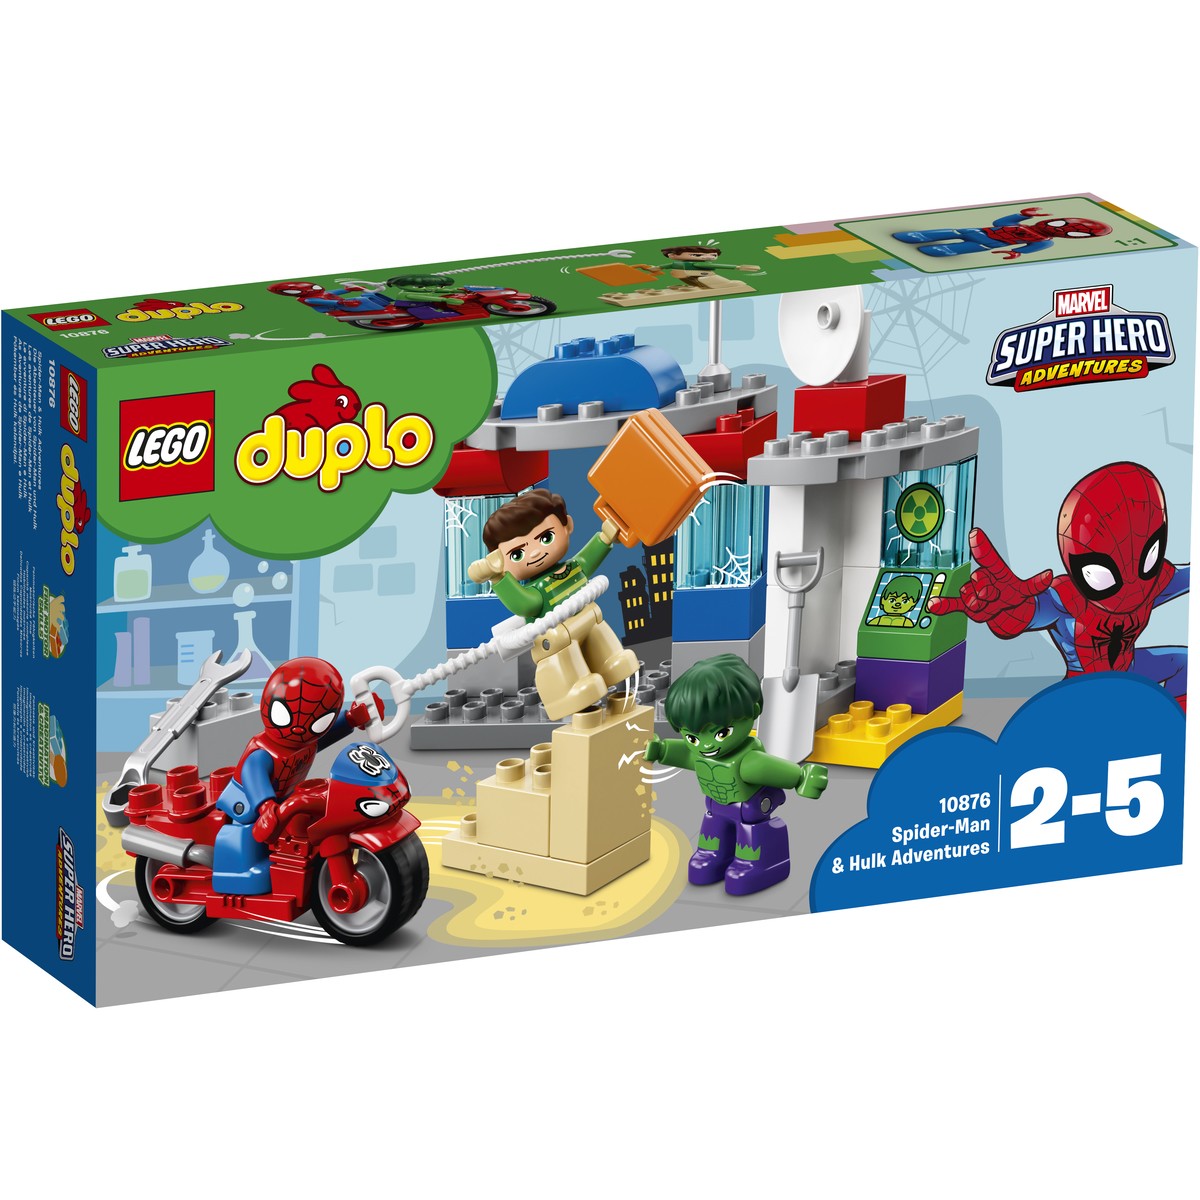 spiderman and hulk duplo